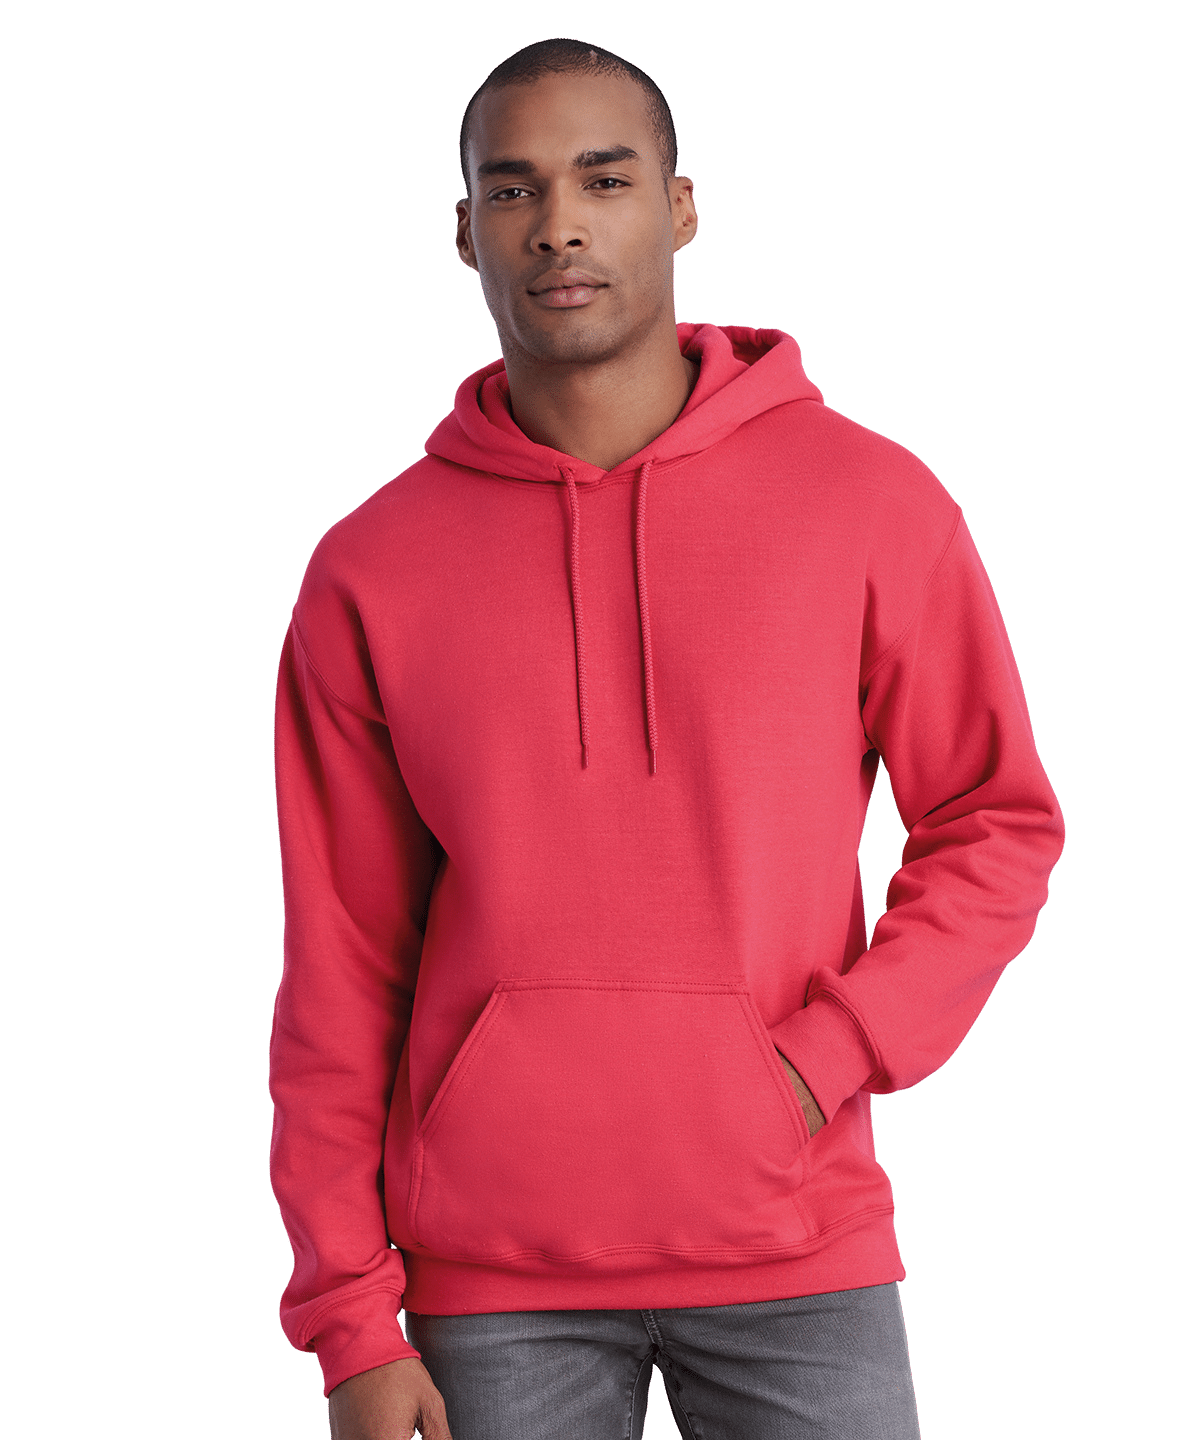 Gildan Men's Heavy Blend Hooded Sweatshirt - Red ss18500 4XL at